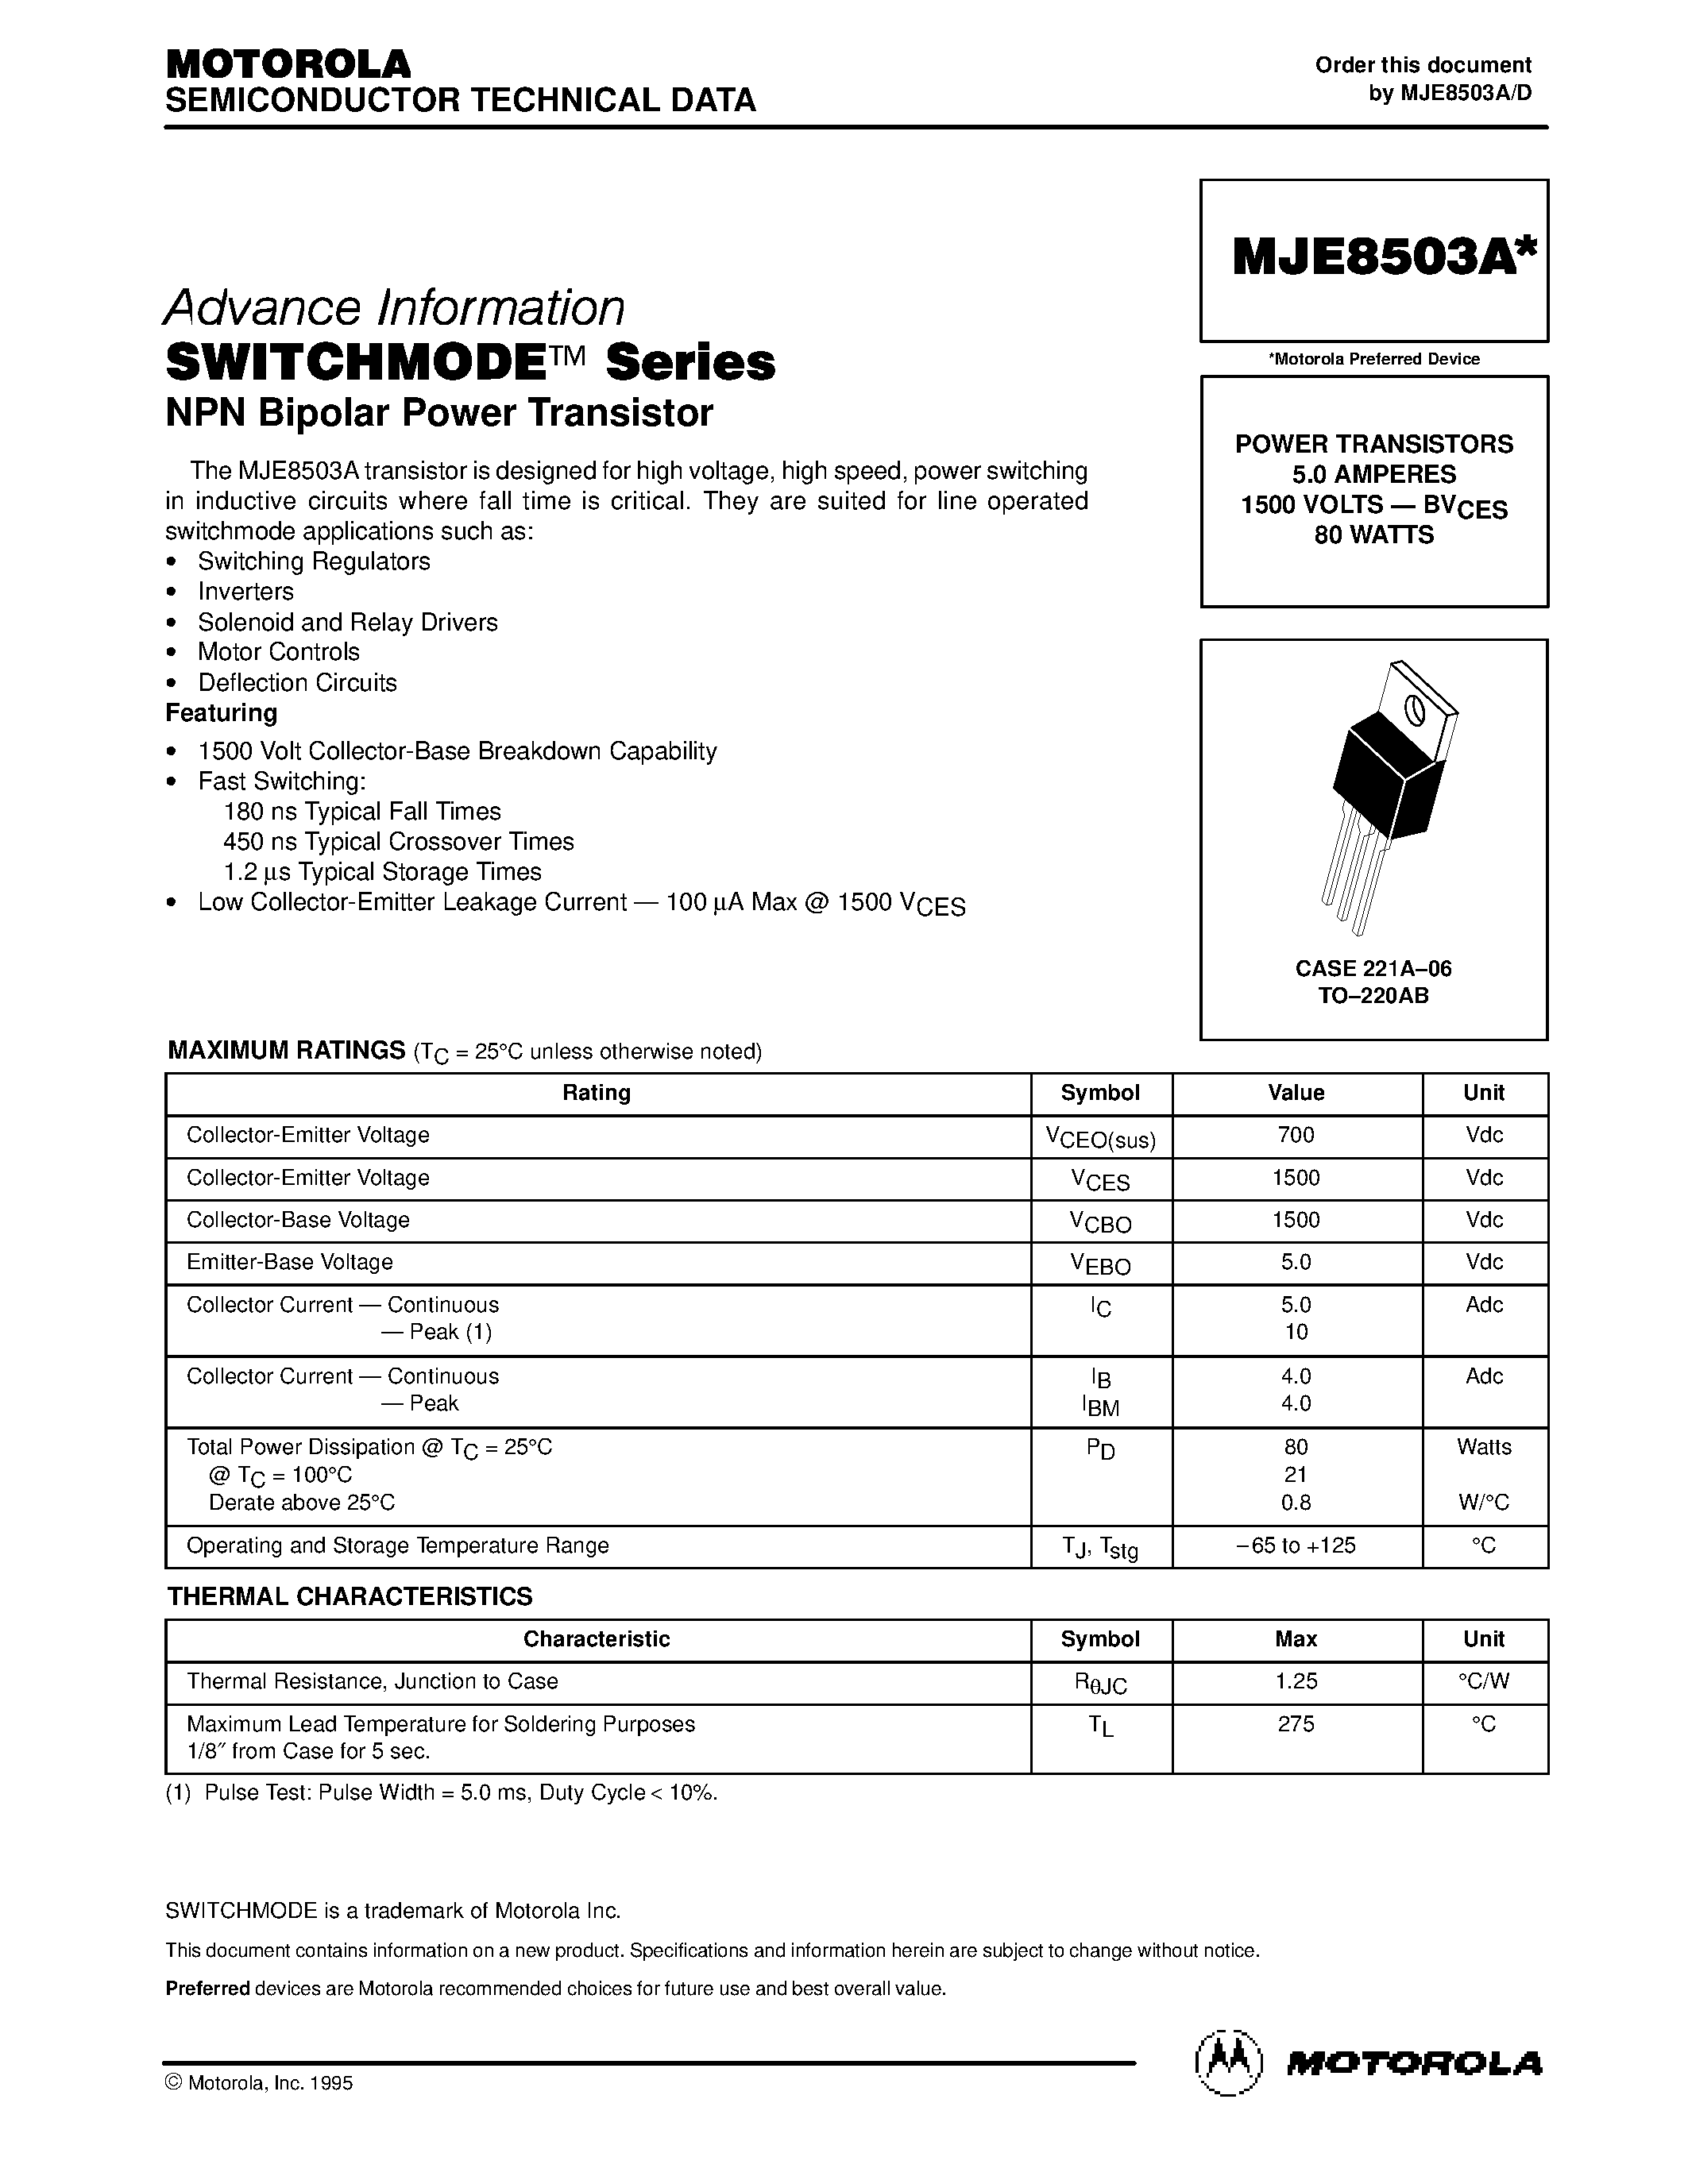 Datasheet MJE8503 - POWER TRANSISTORS 5.0 AMPERES 1500 VOLTS - BVCES 80 WATTS page 1